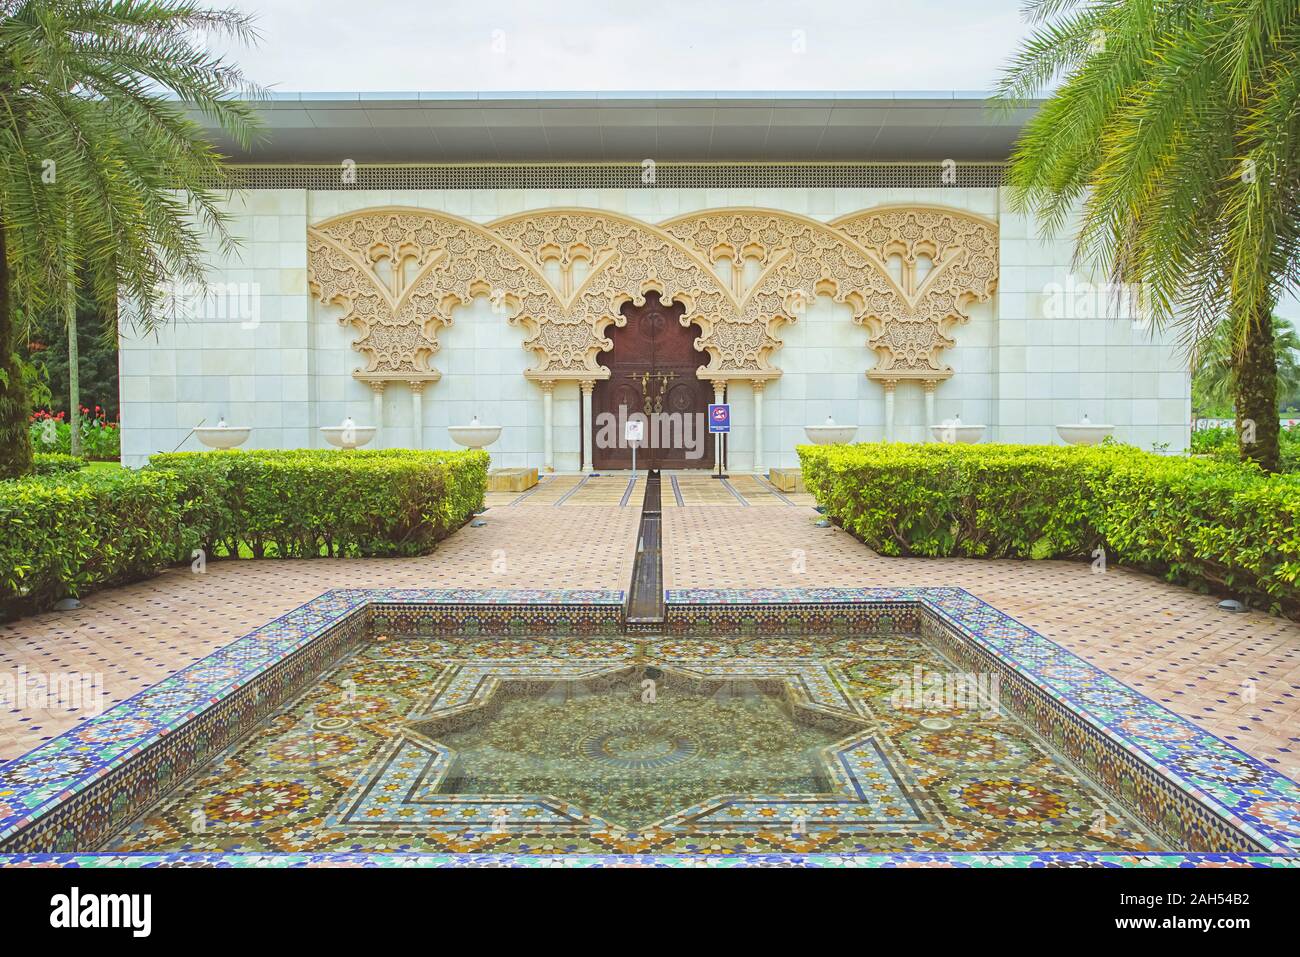 The Astaka Morocco, travel destinations Moroccan architecture in Putrajaya, Malaysia. Stock Photo